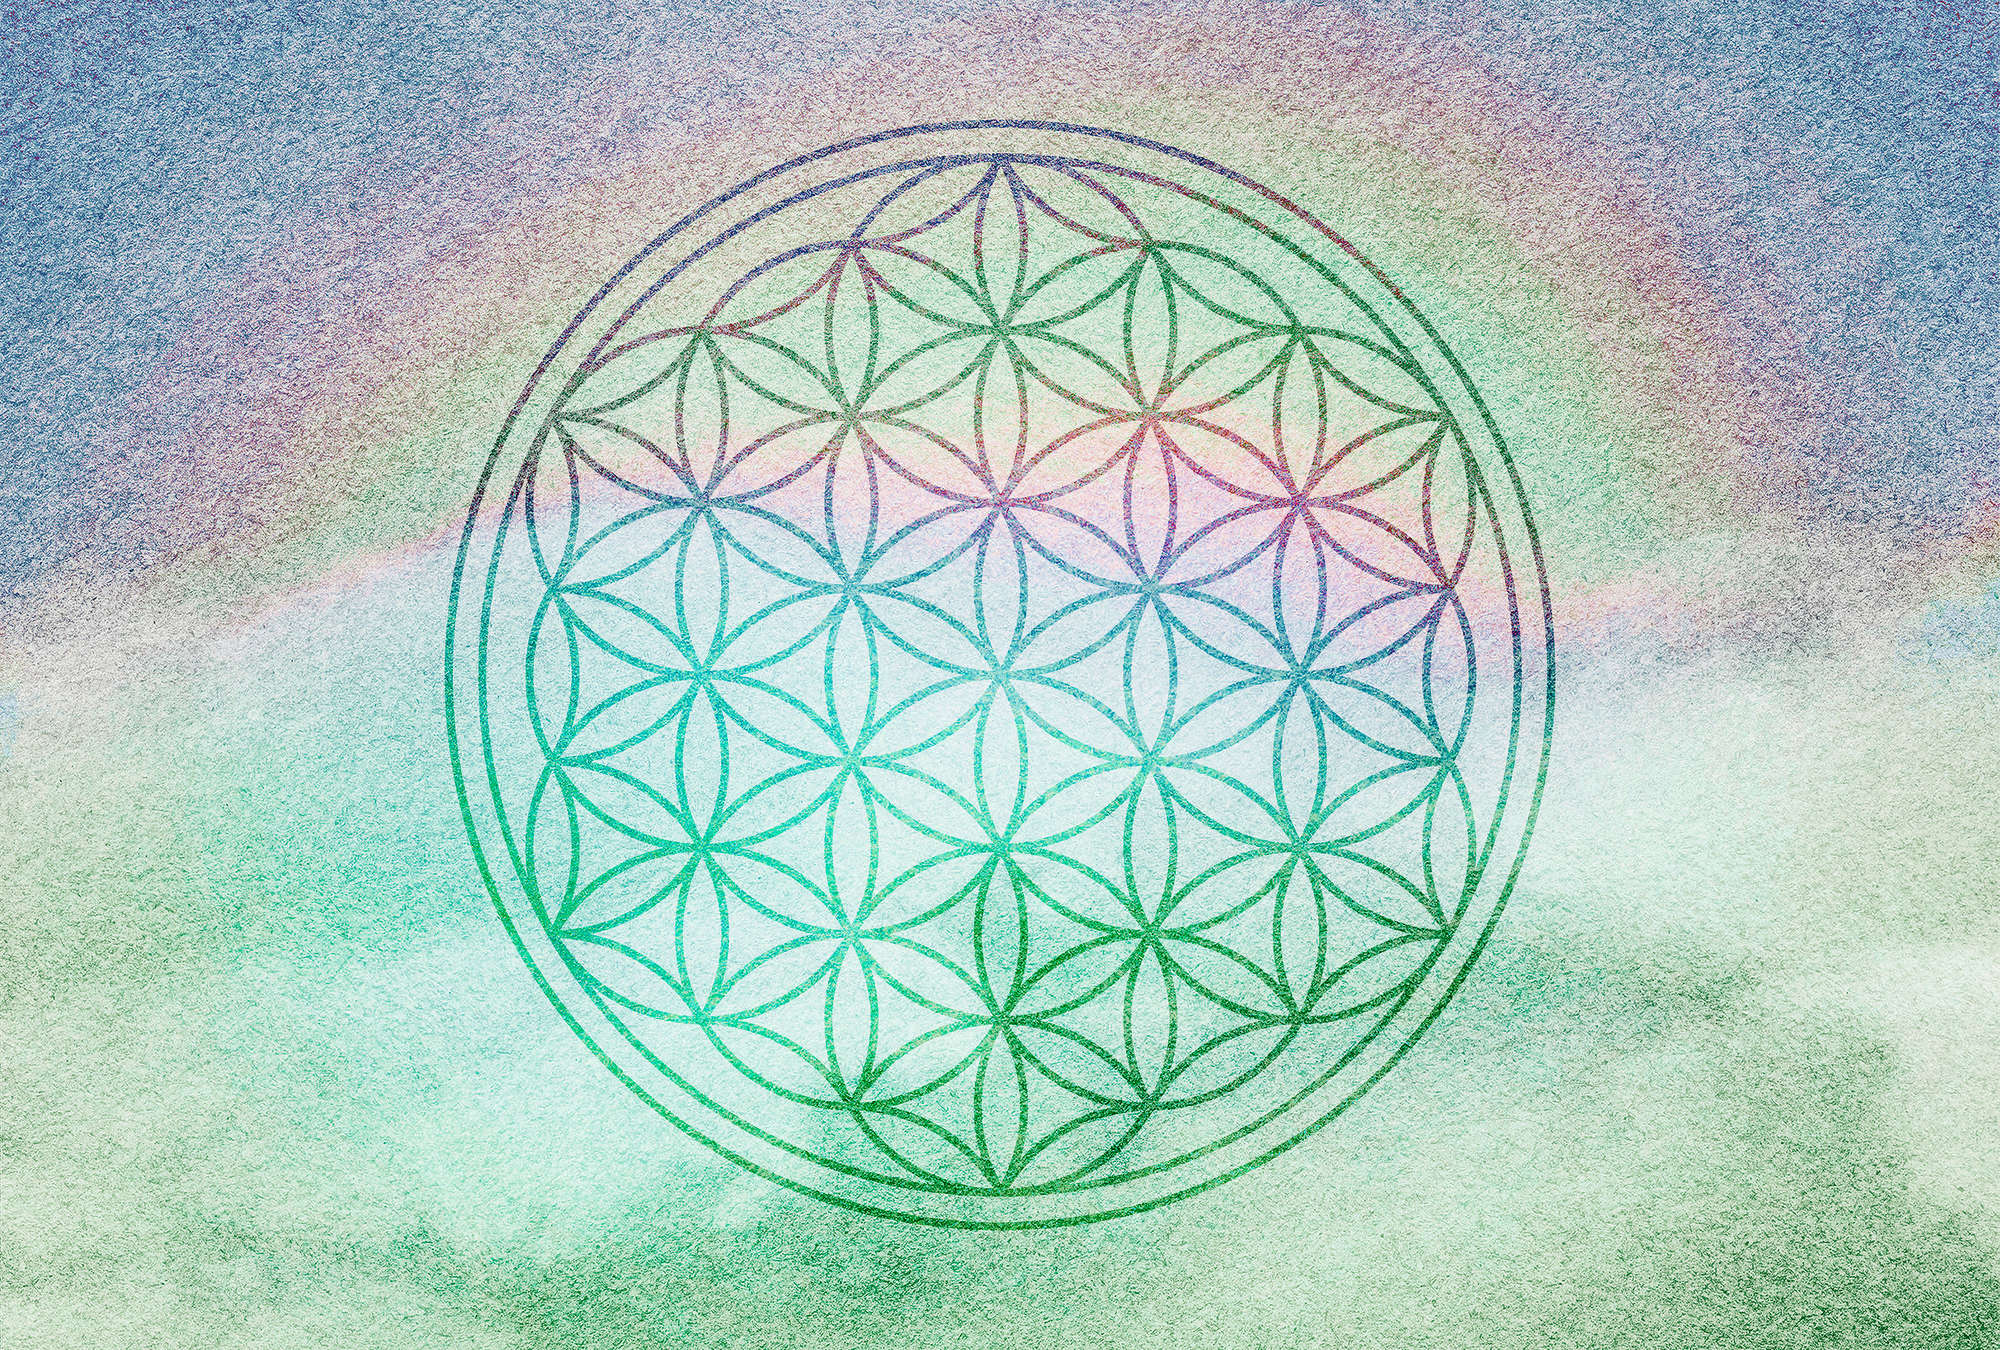             Fototapete Mandala-Design mit Regenbogenfarben – Grün, Violett, Rosa
        